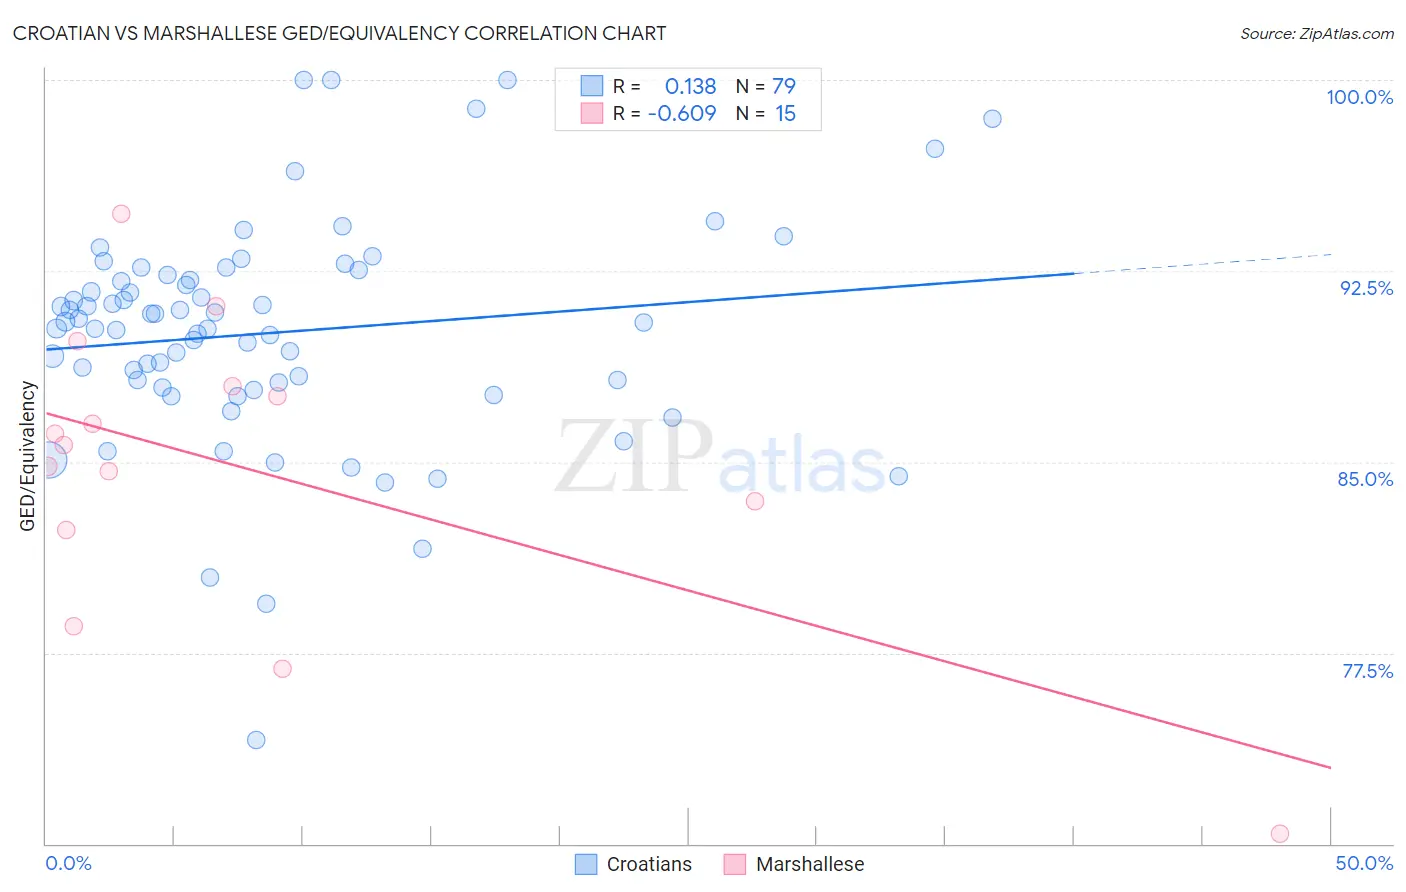 Croatian vs Marshallese GED/Equivalency